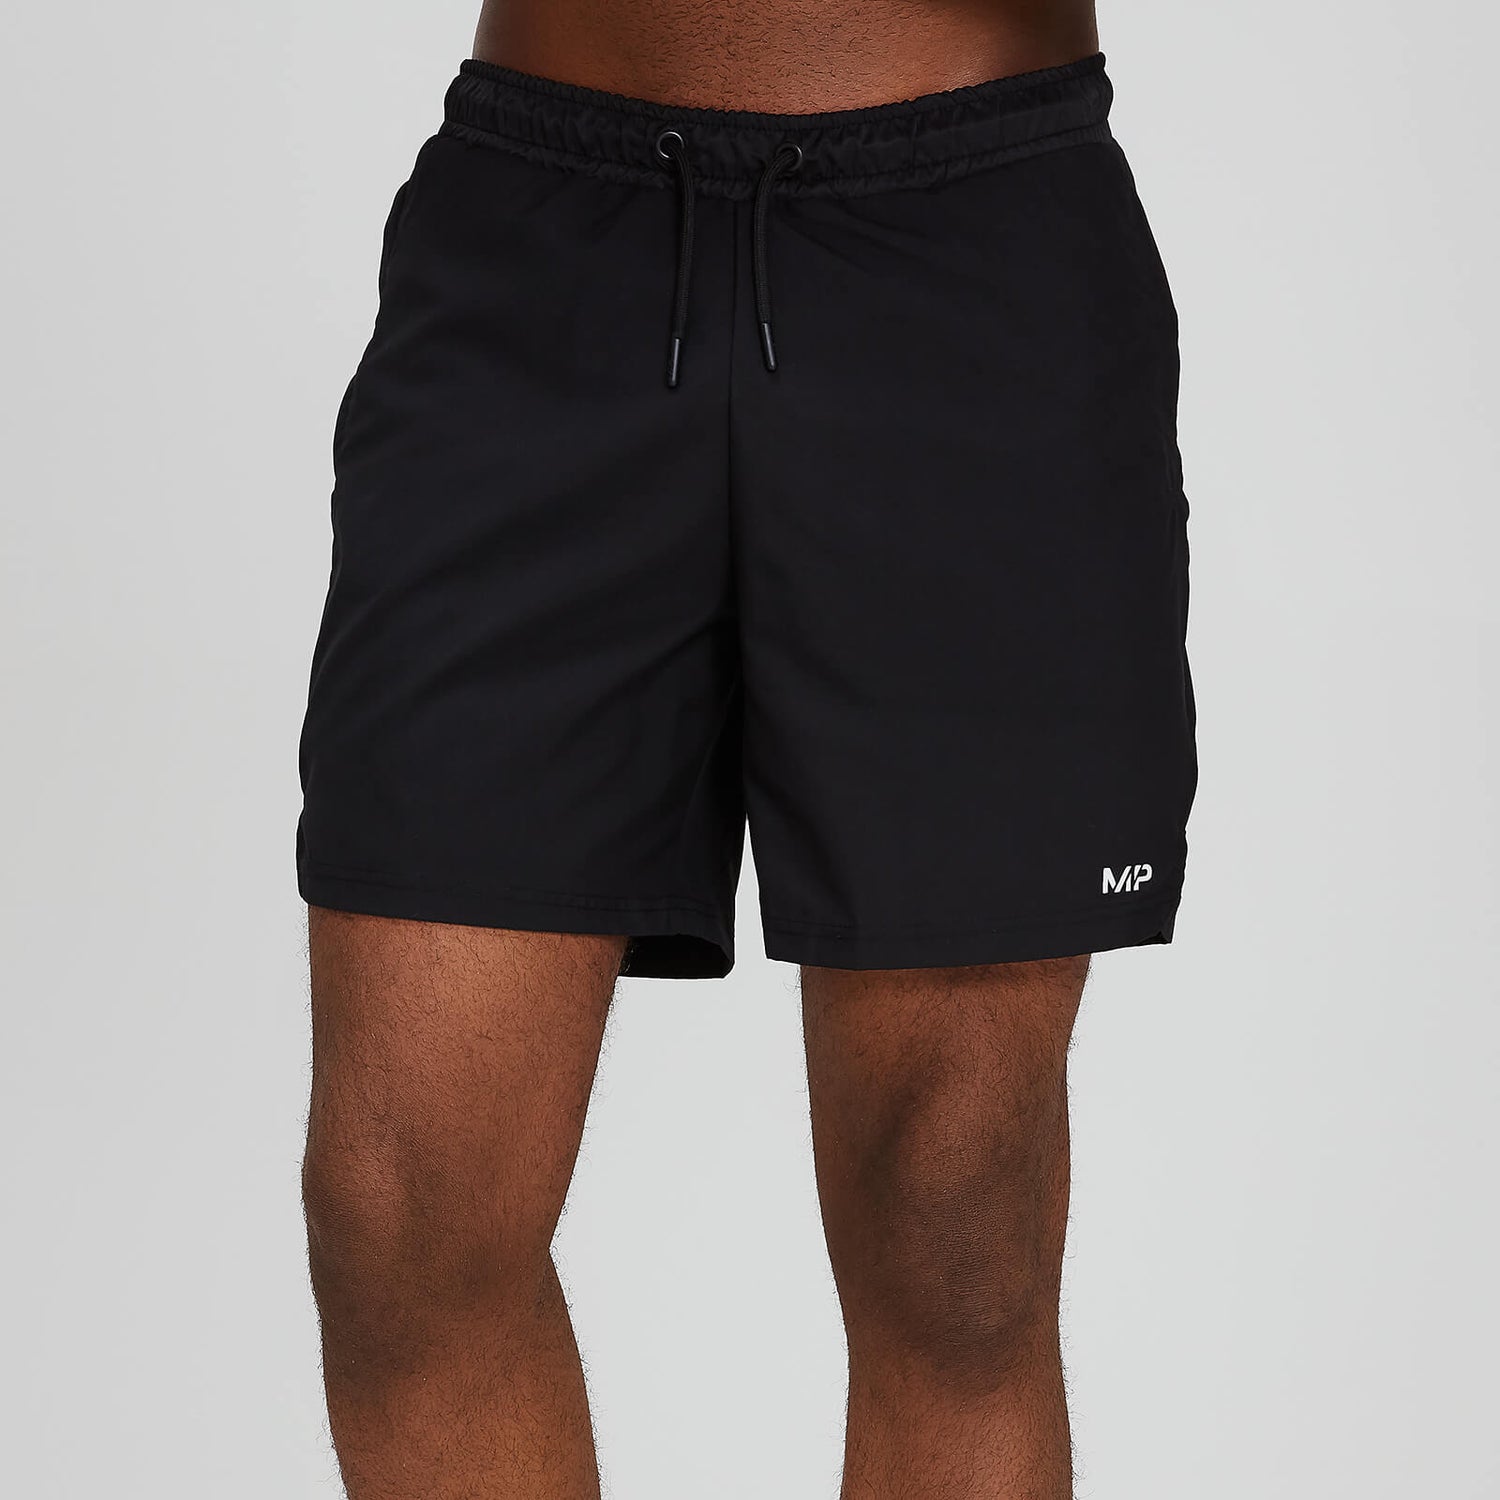 Pacific Swim Shorts - Black - XS